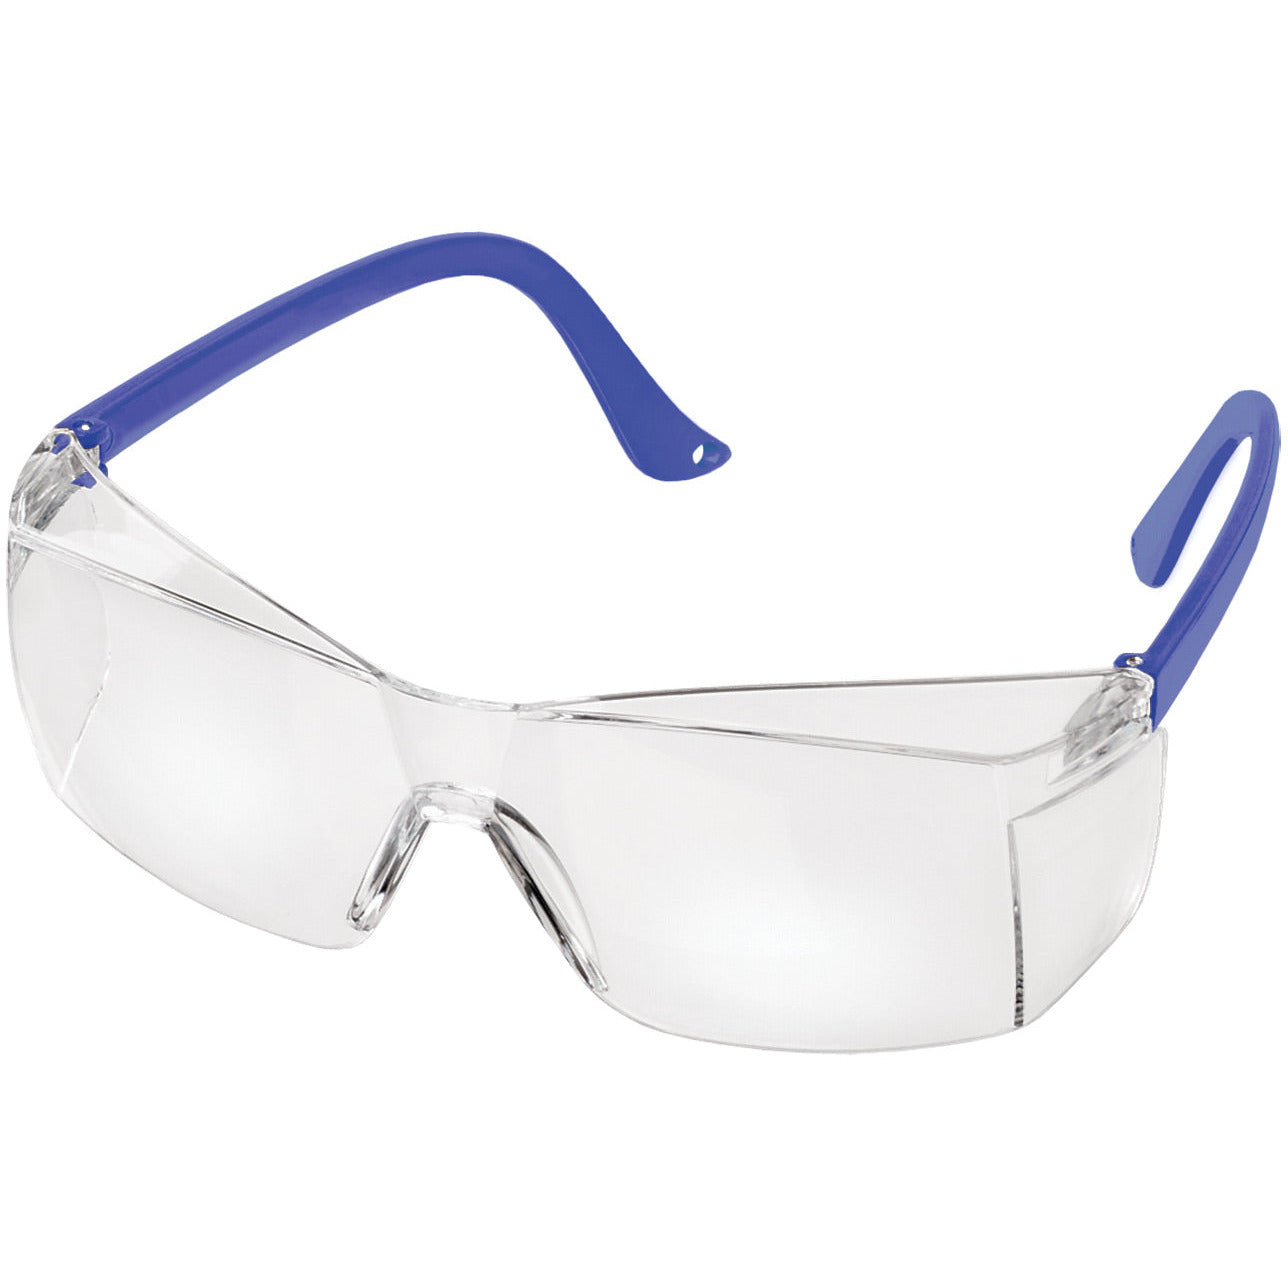 Safety Glasses Safety Glasses Lasalle Uniform Royal Blue  